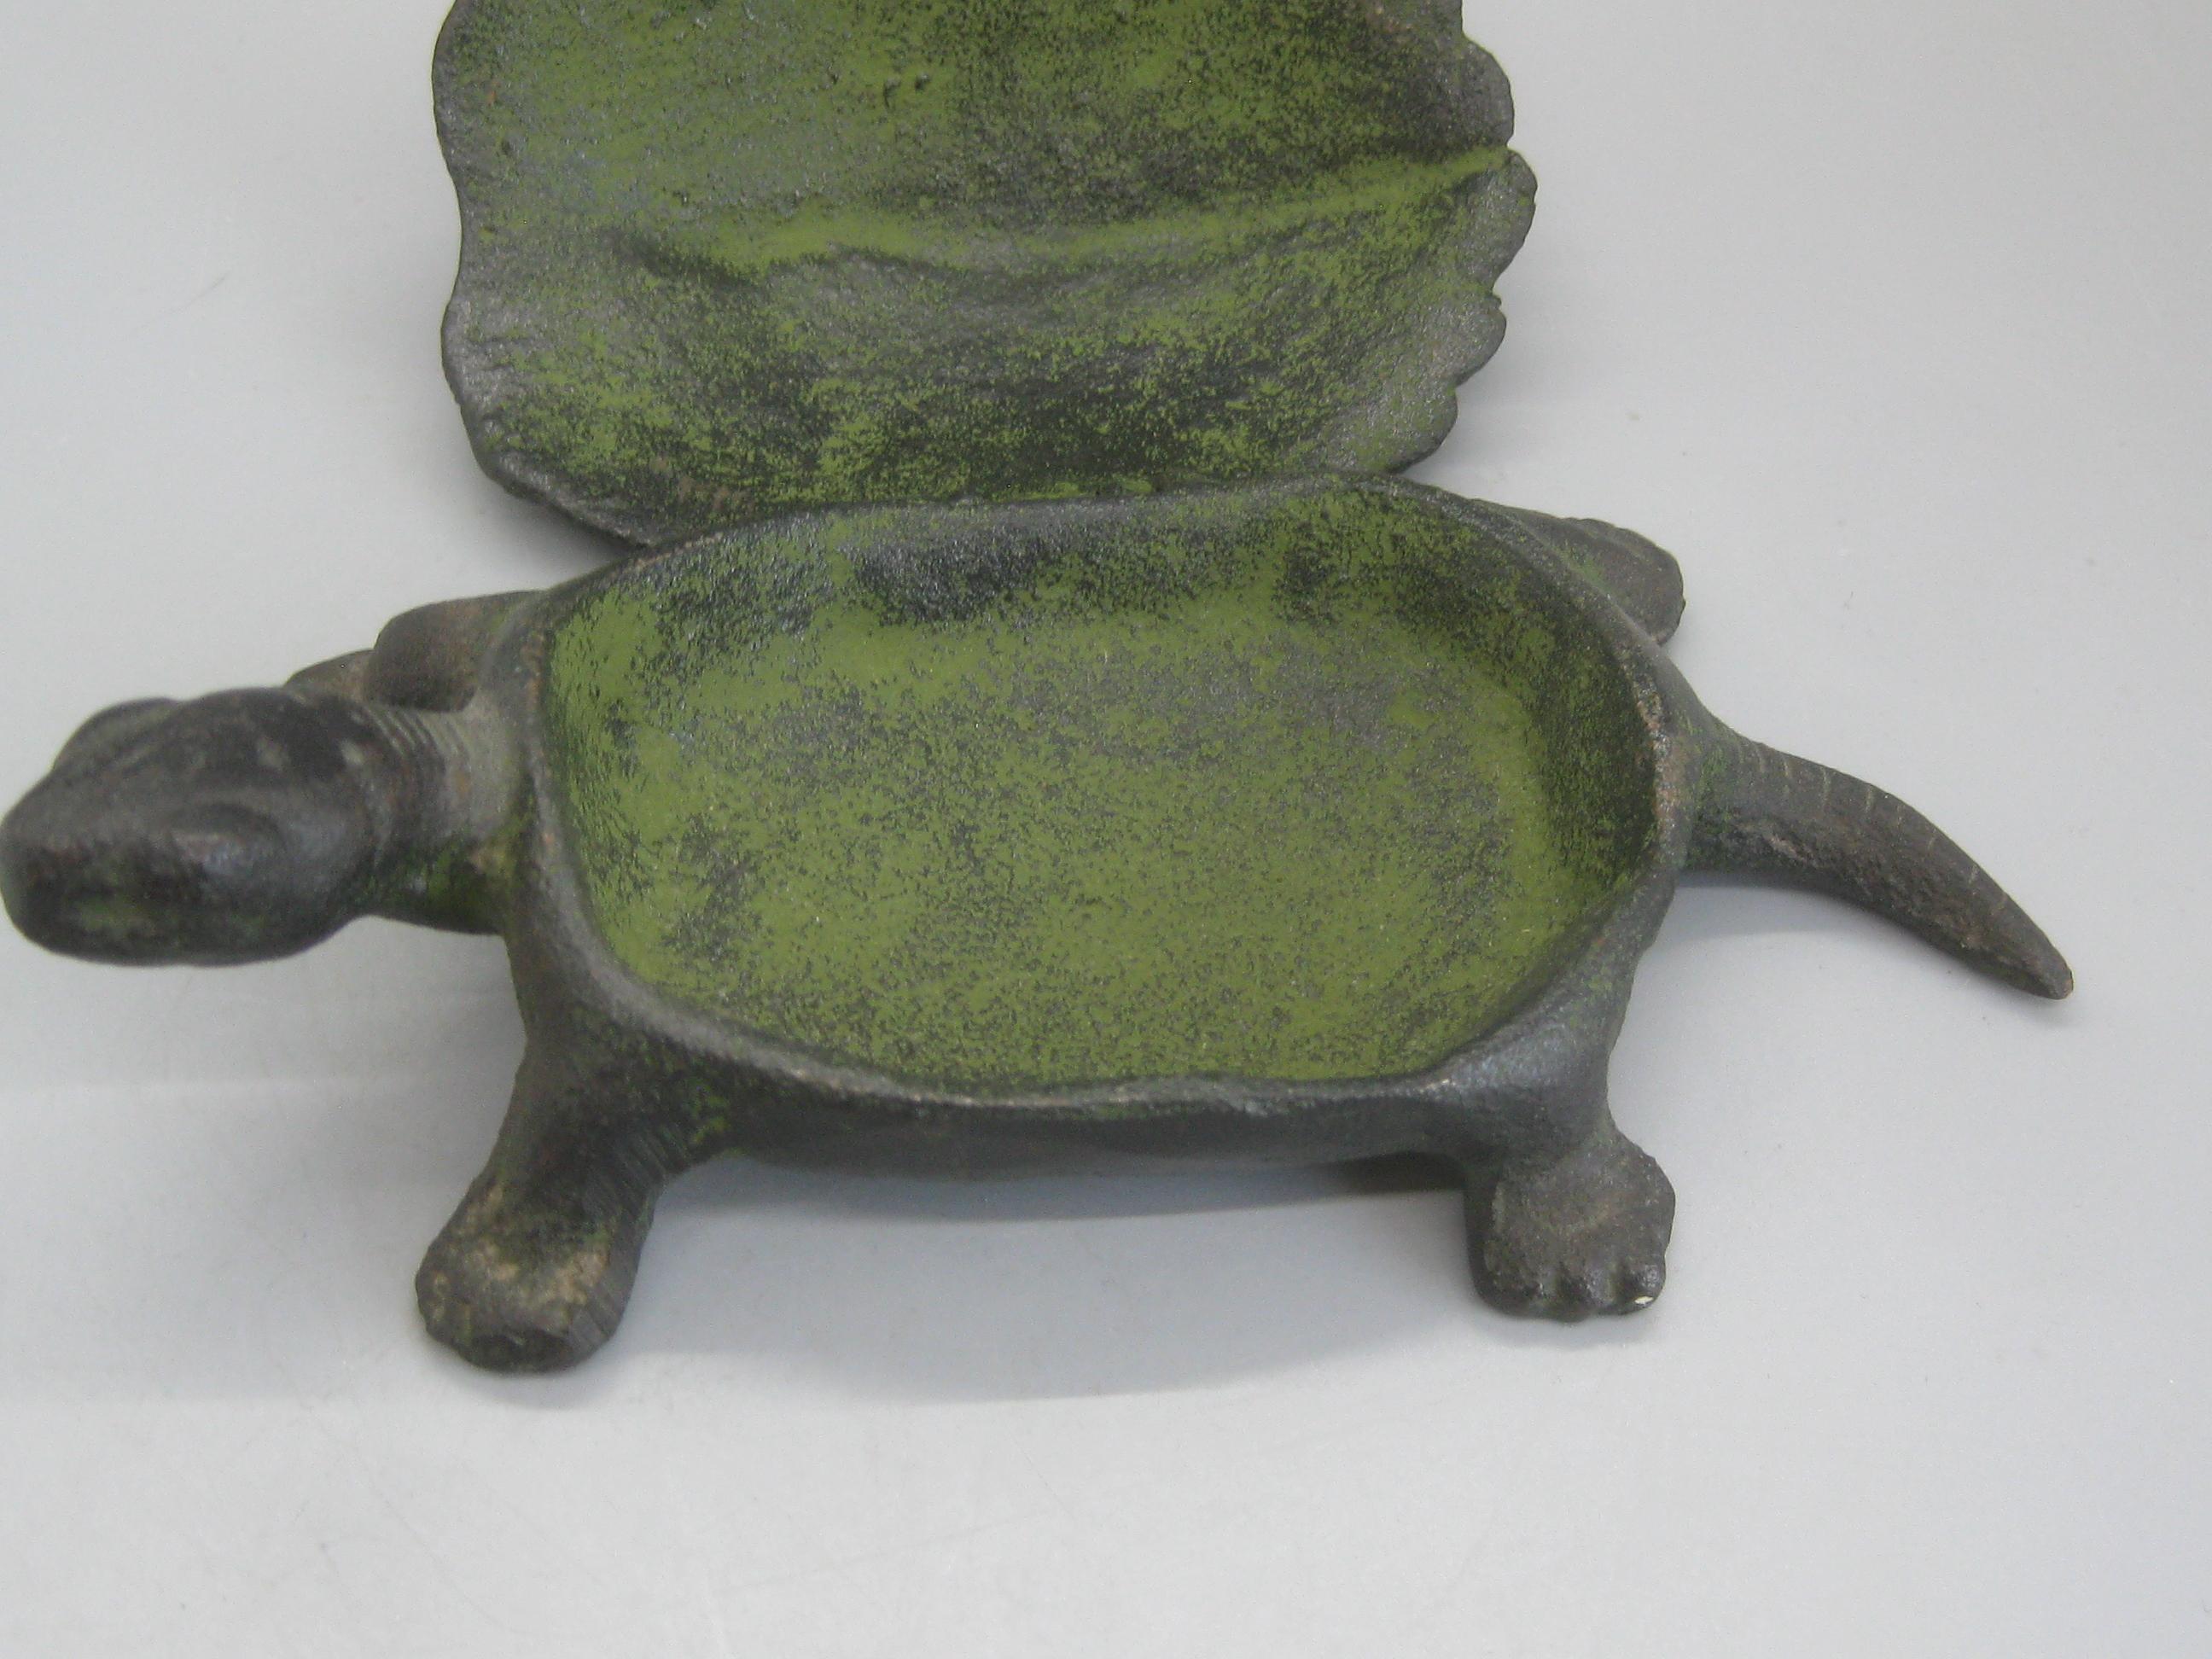 North American Vintage Japanese Cast Iron Figural Turtle Trinket Stash Box Made in Japan